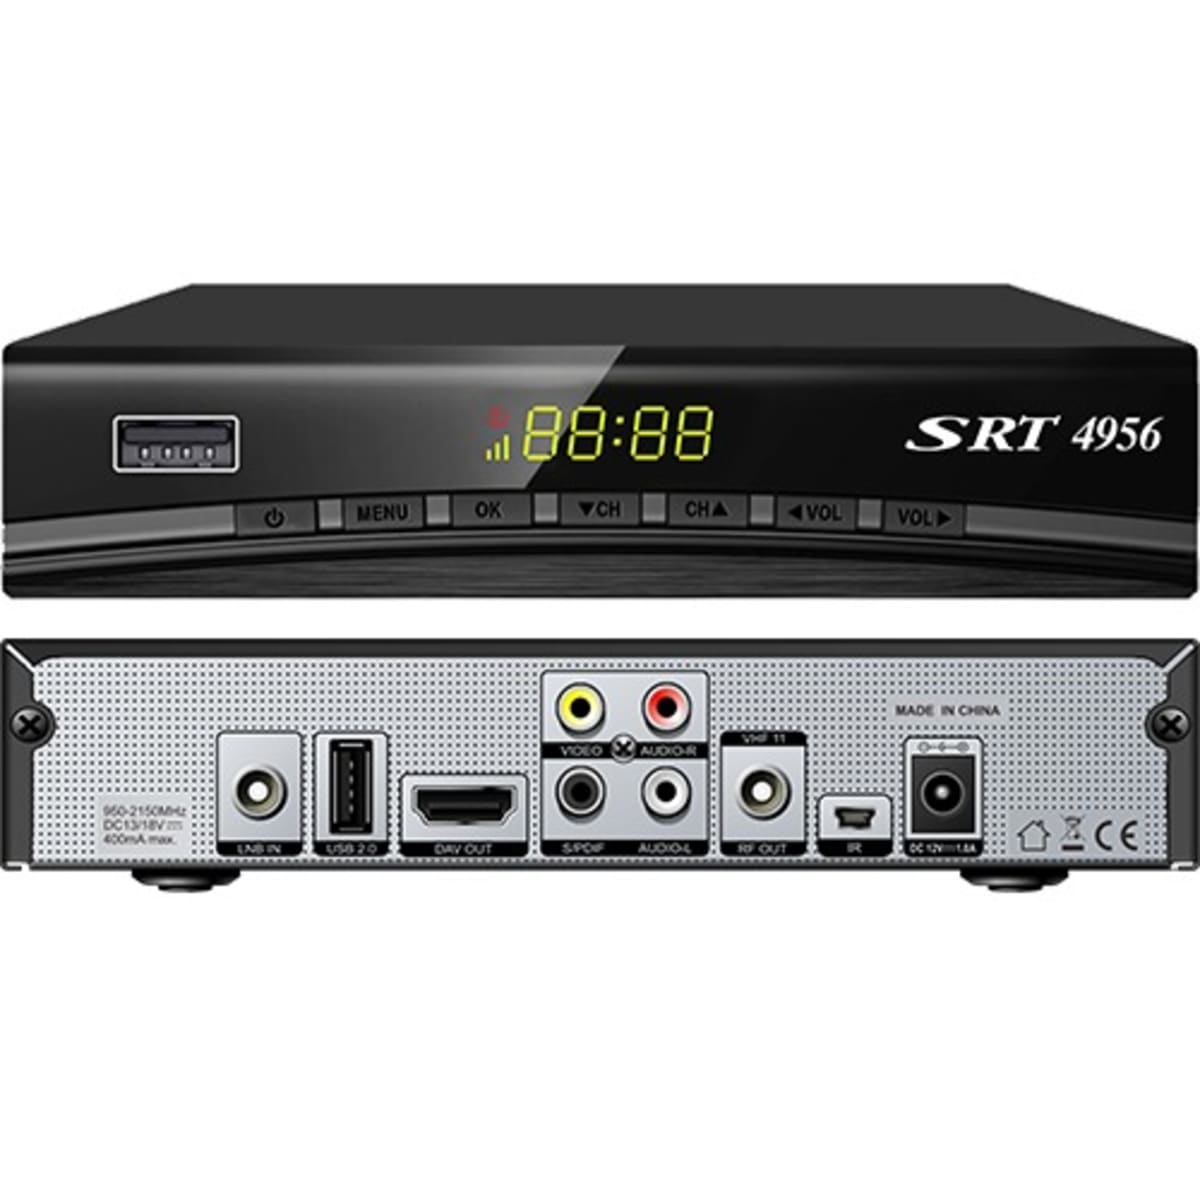 STRONG Digital HD Satellite TV Receiver - Srt 4956